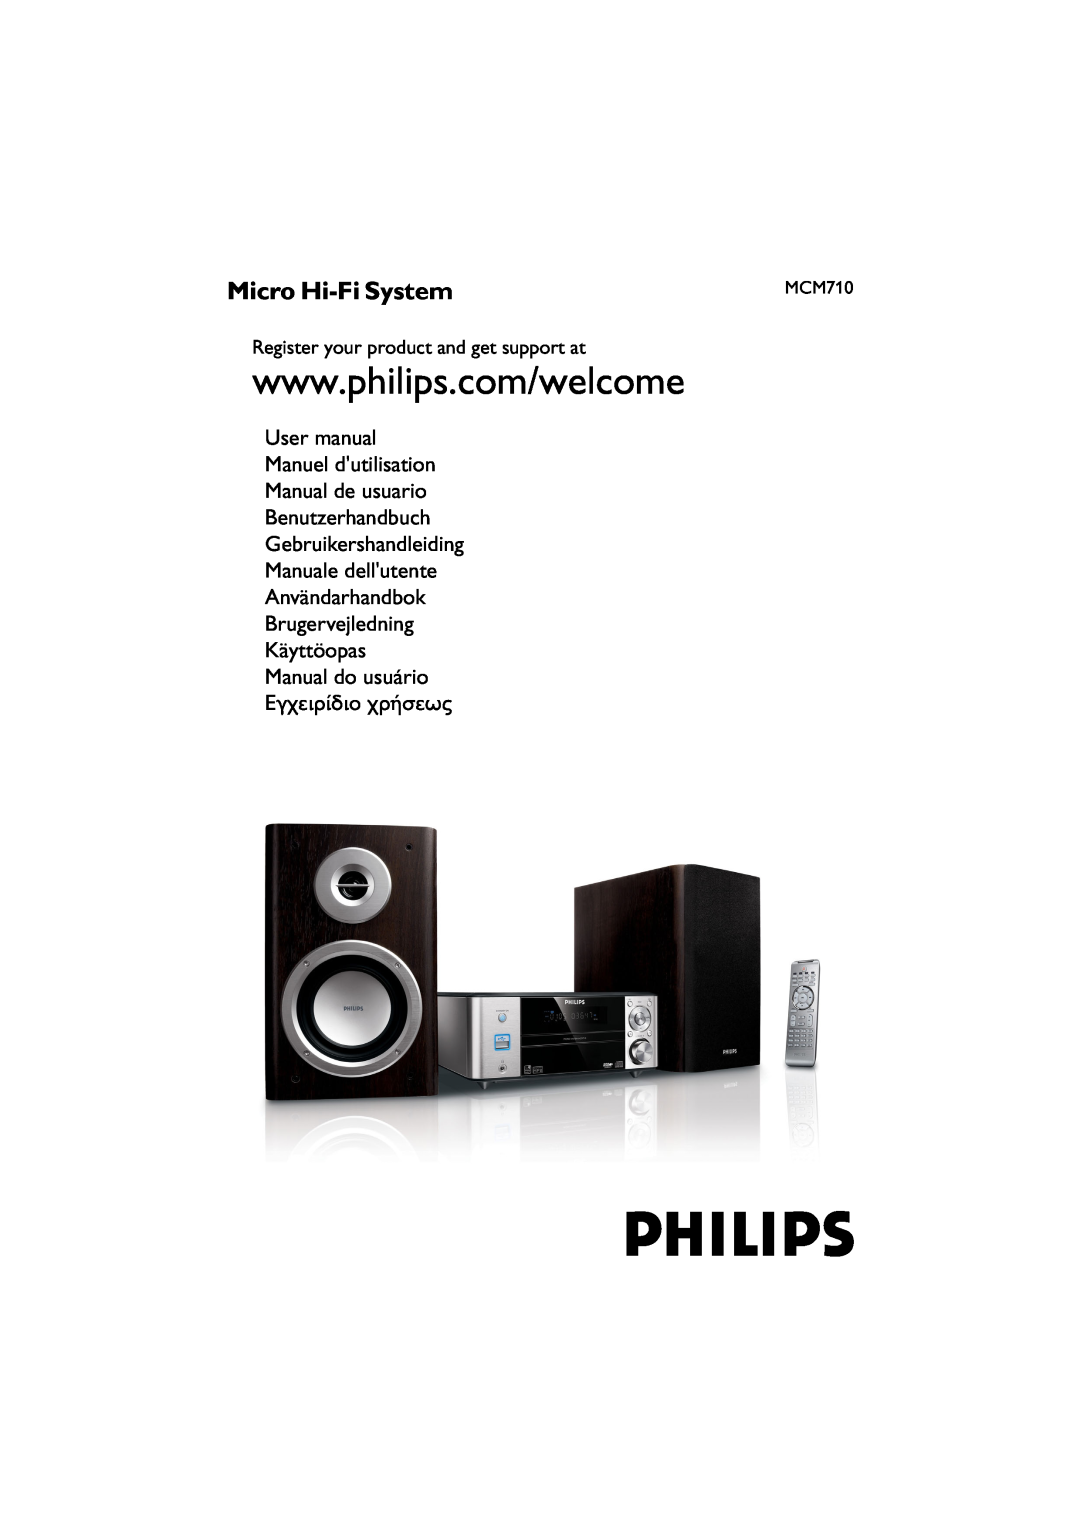 Philips MCM710 user manual Micro Hi-FiSystem, Benutzerhandbuch Gebruikershandleiding, Manuale dellutente Användarhandbok 